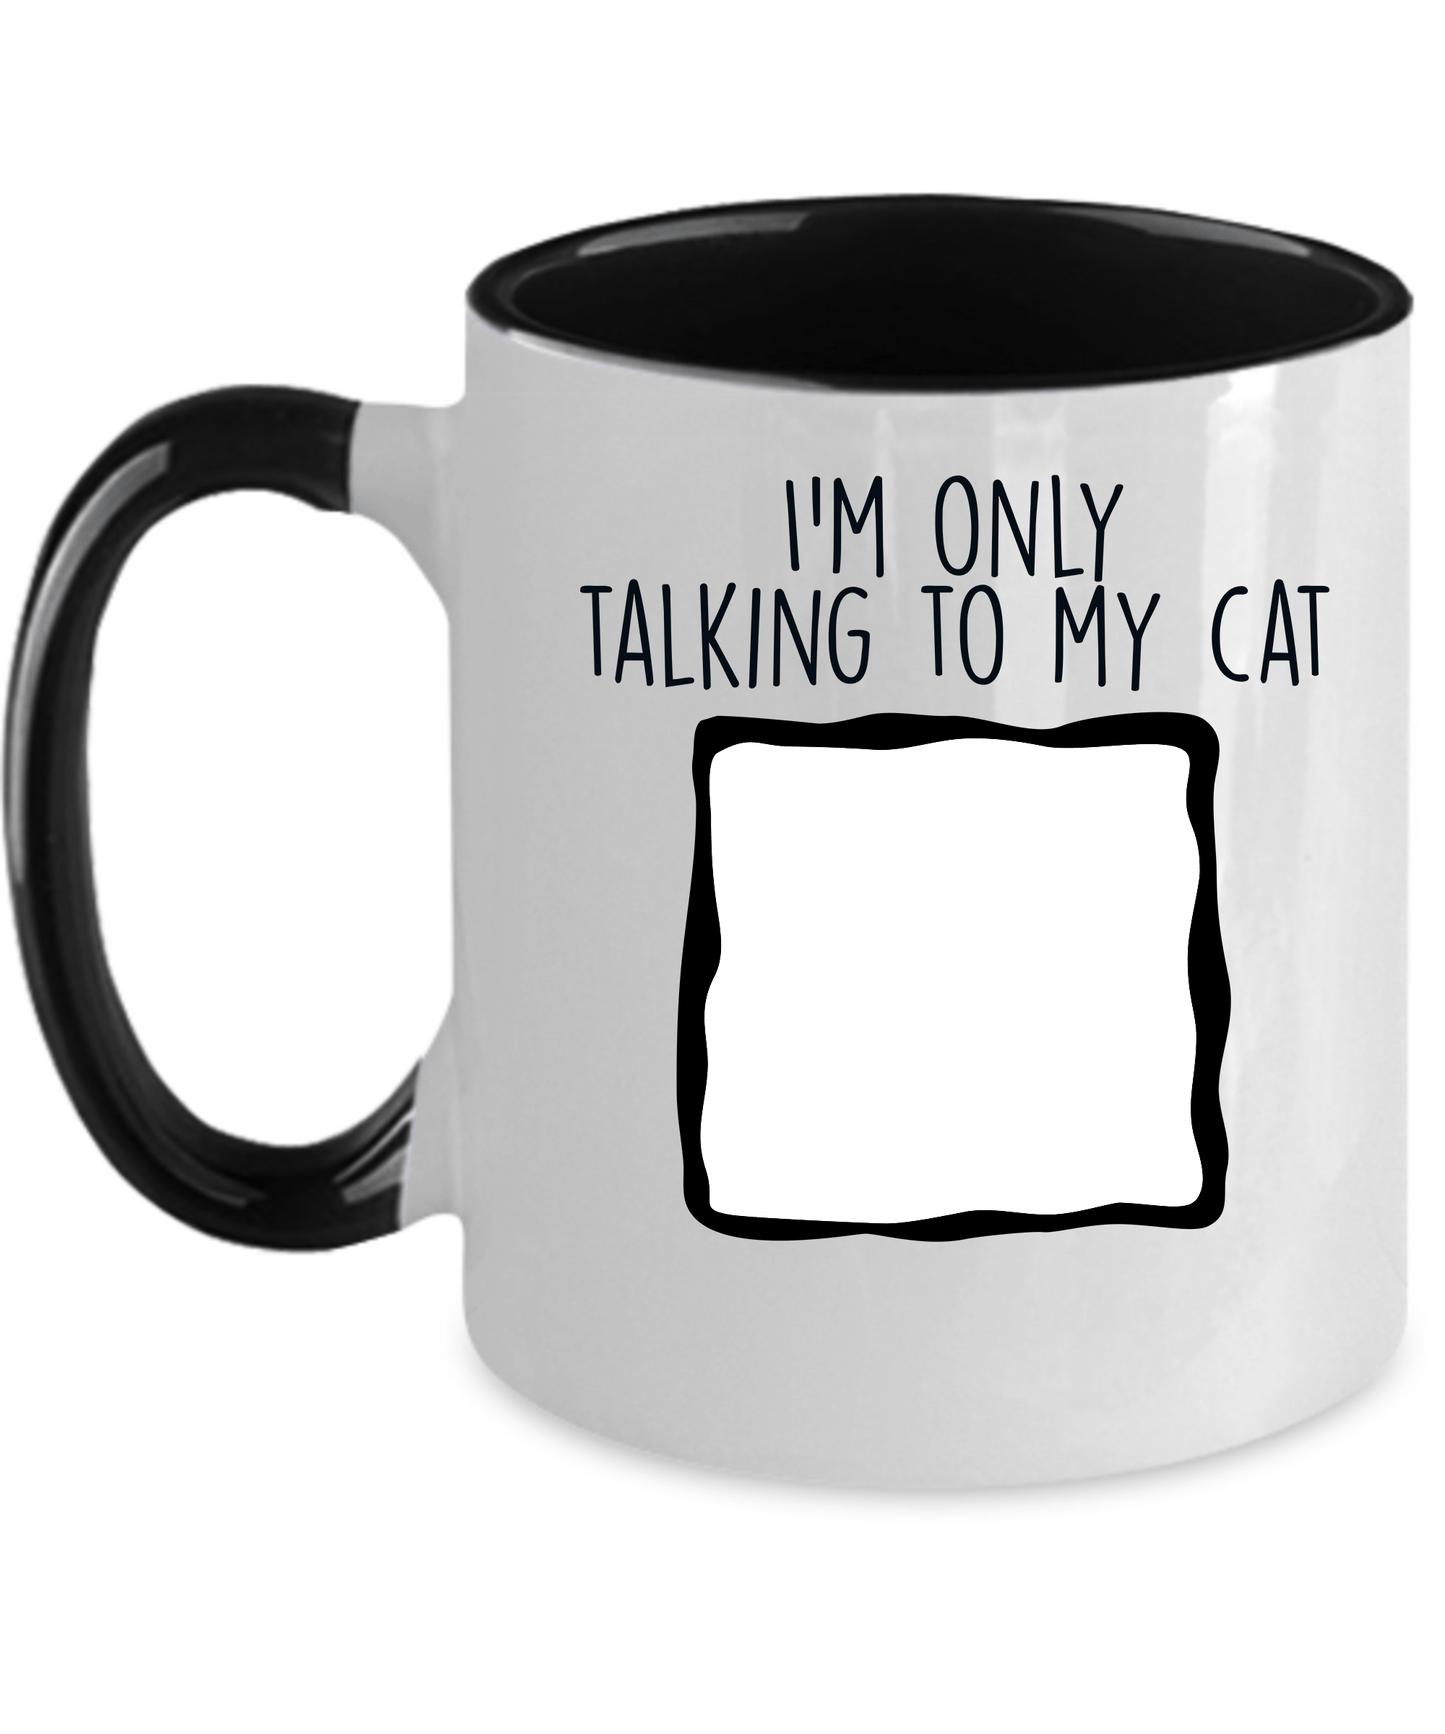 Personalized Photo Upload I'm Only Talking to My Cat Custom Ceramic Coffee Mug